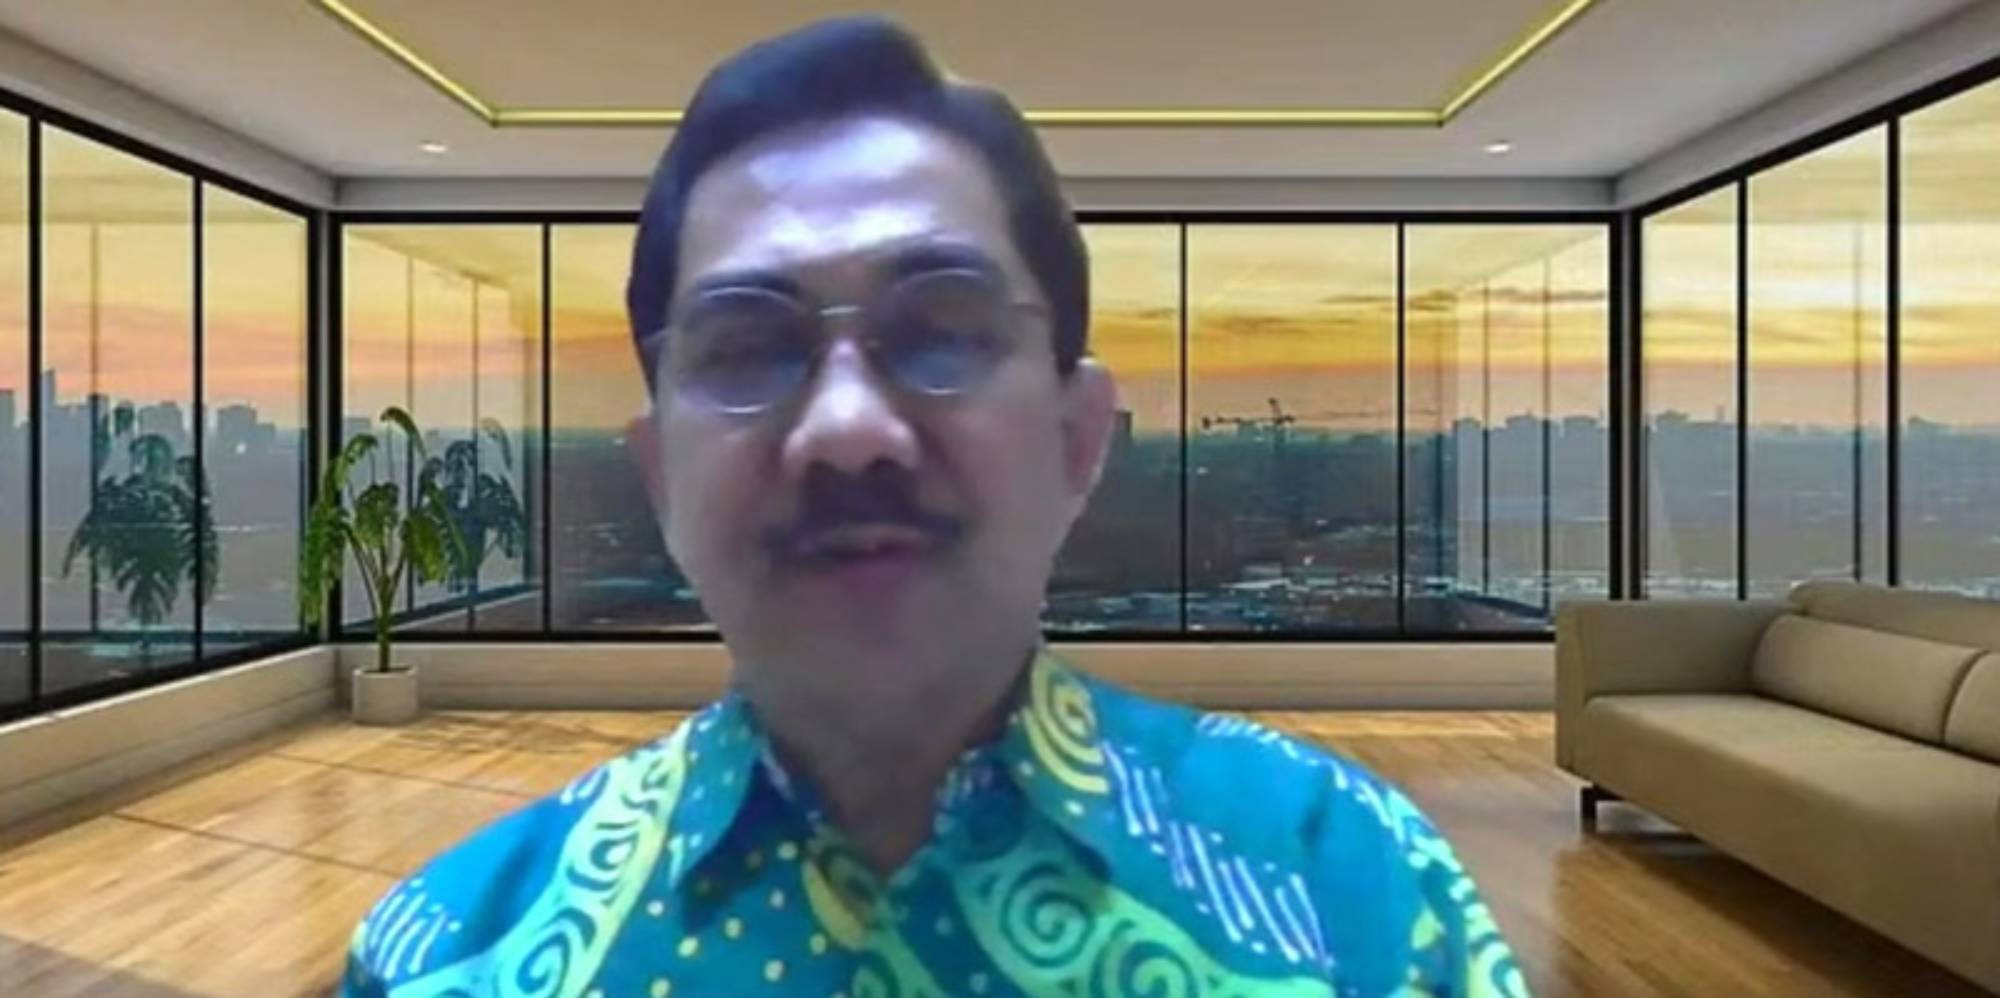 Kunci Mewujudkan Indonesia Emas 2045 dengan Penguasaan Teknologi Digital - JPNN.com